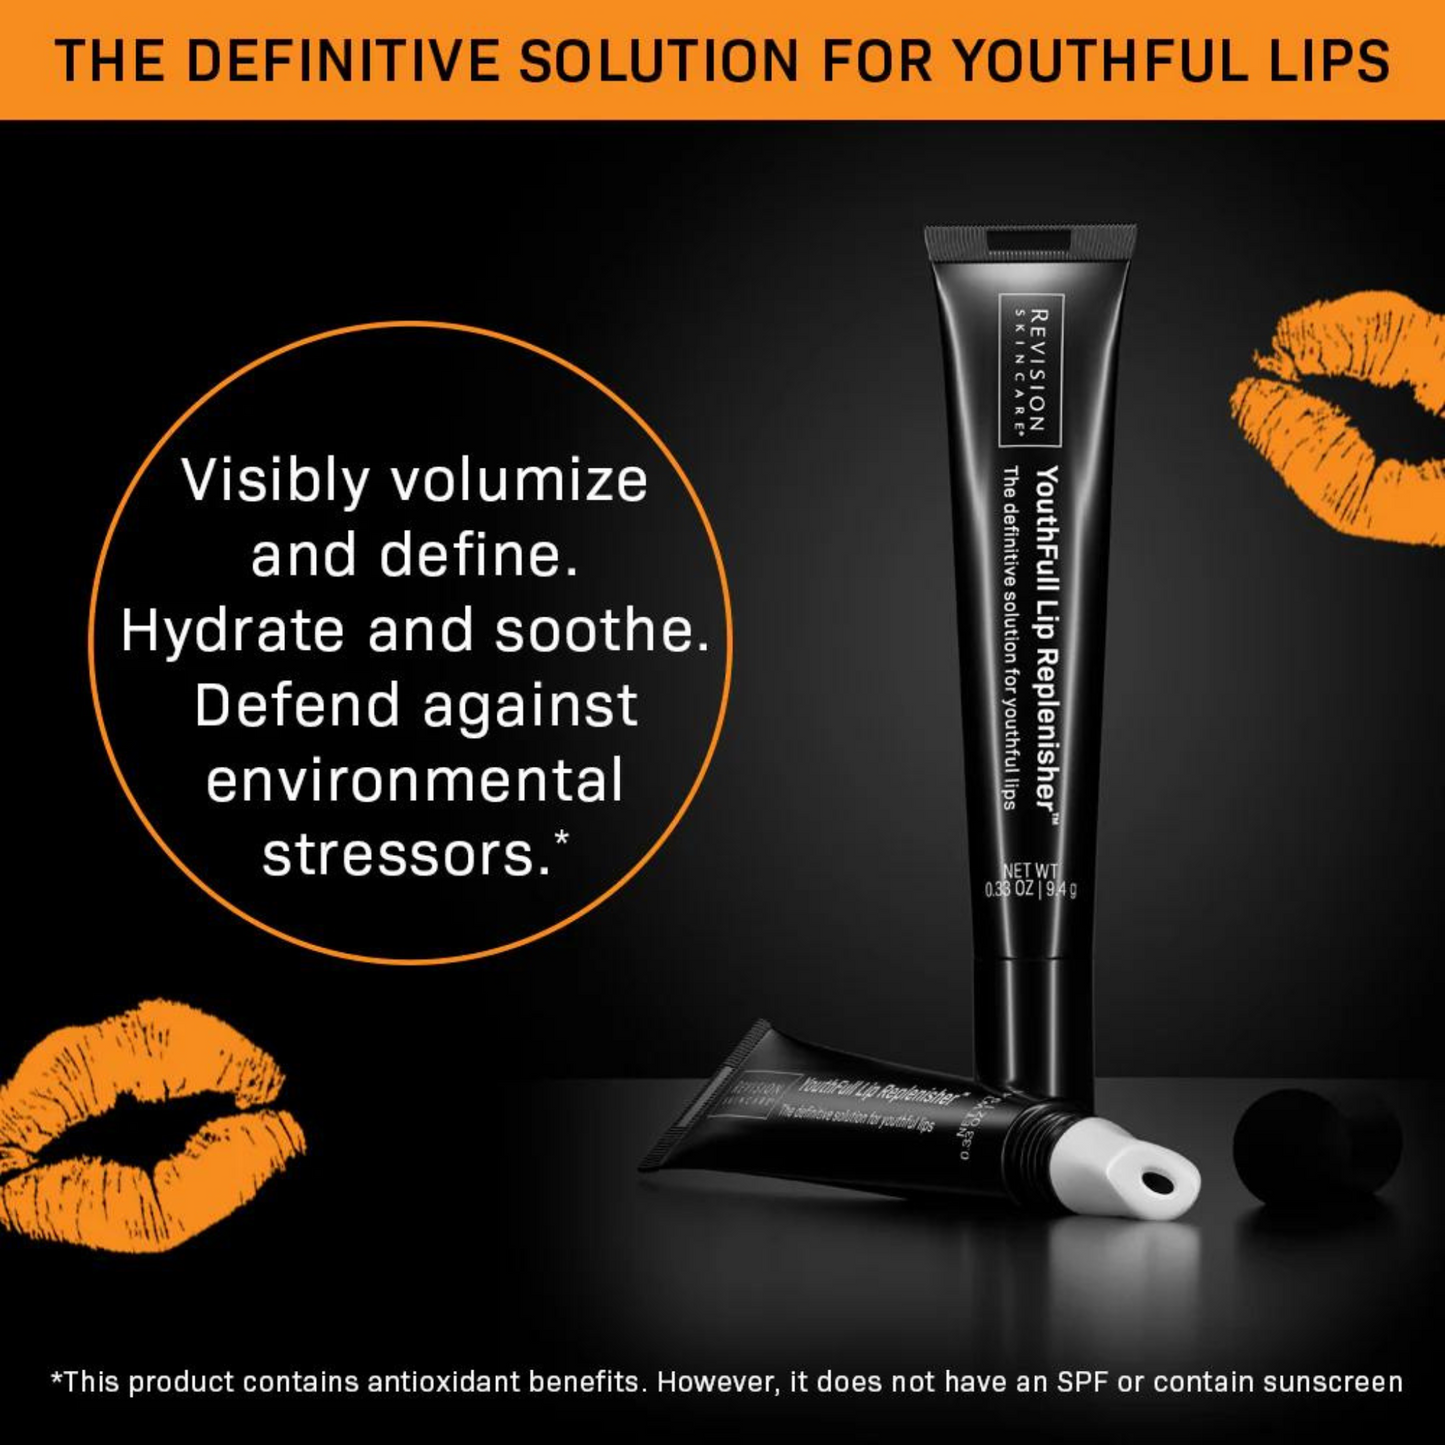 YouthFull Lip Replenisher® | Revision Skincare